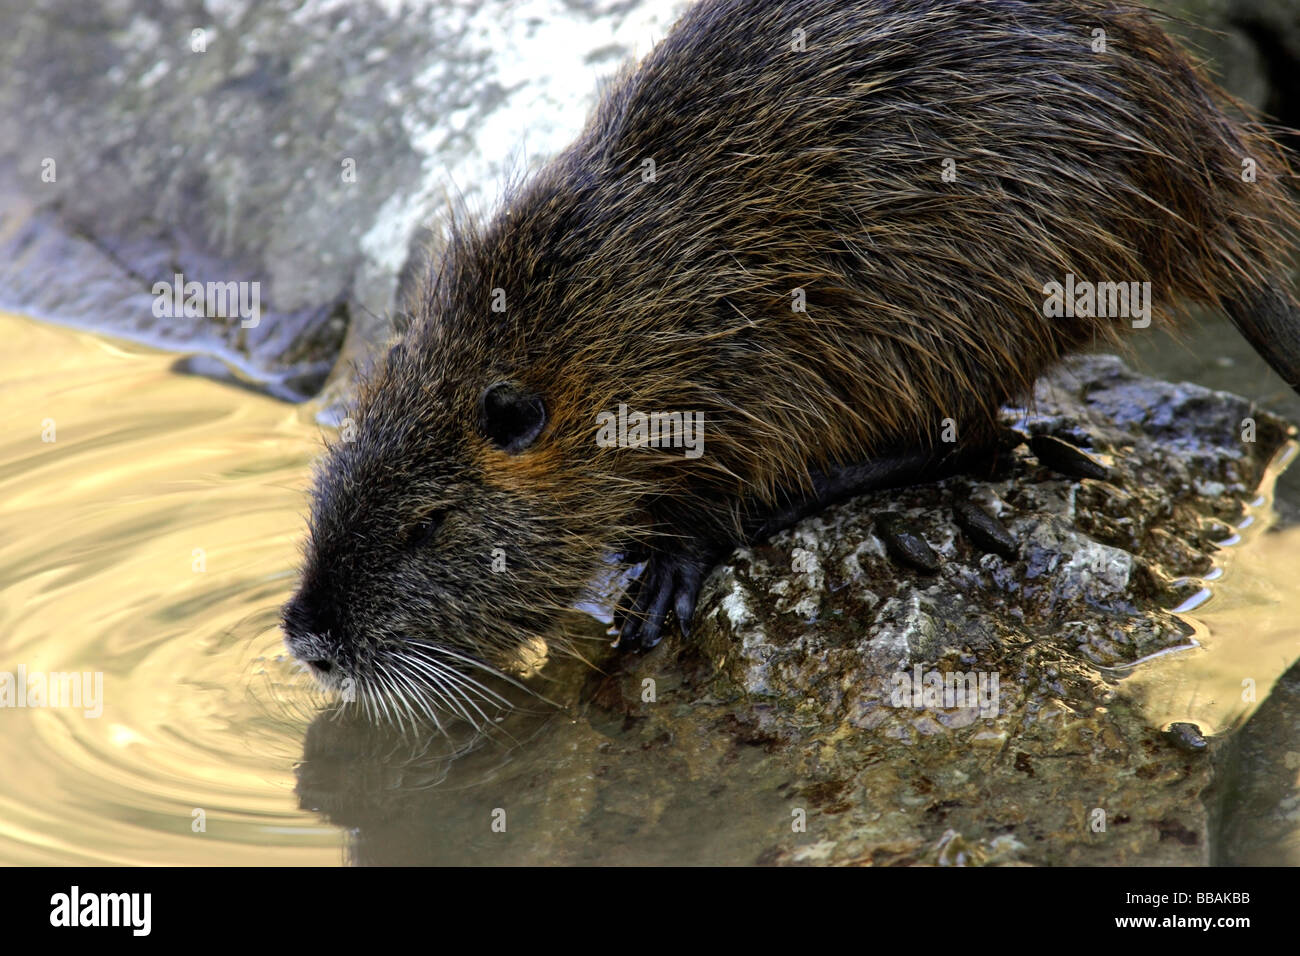 A Swamp Beaver Biberratte Myocastor coypus Drinking Water Stock Photo